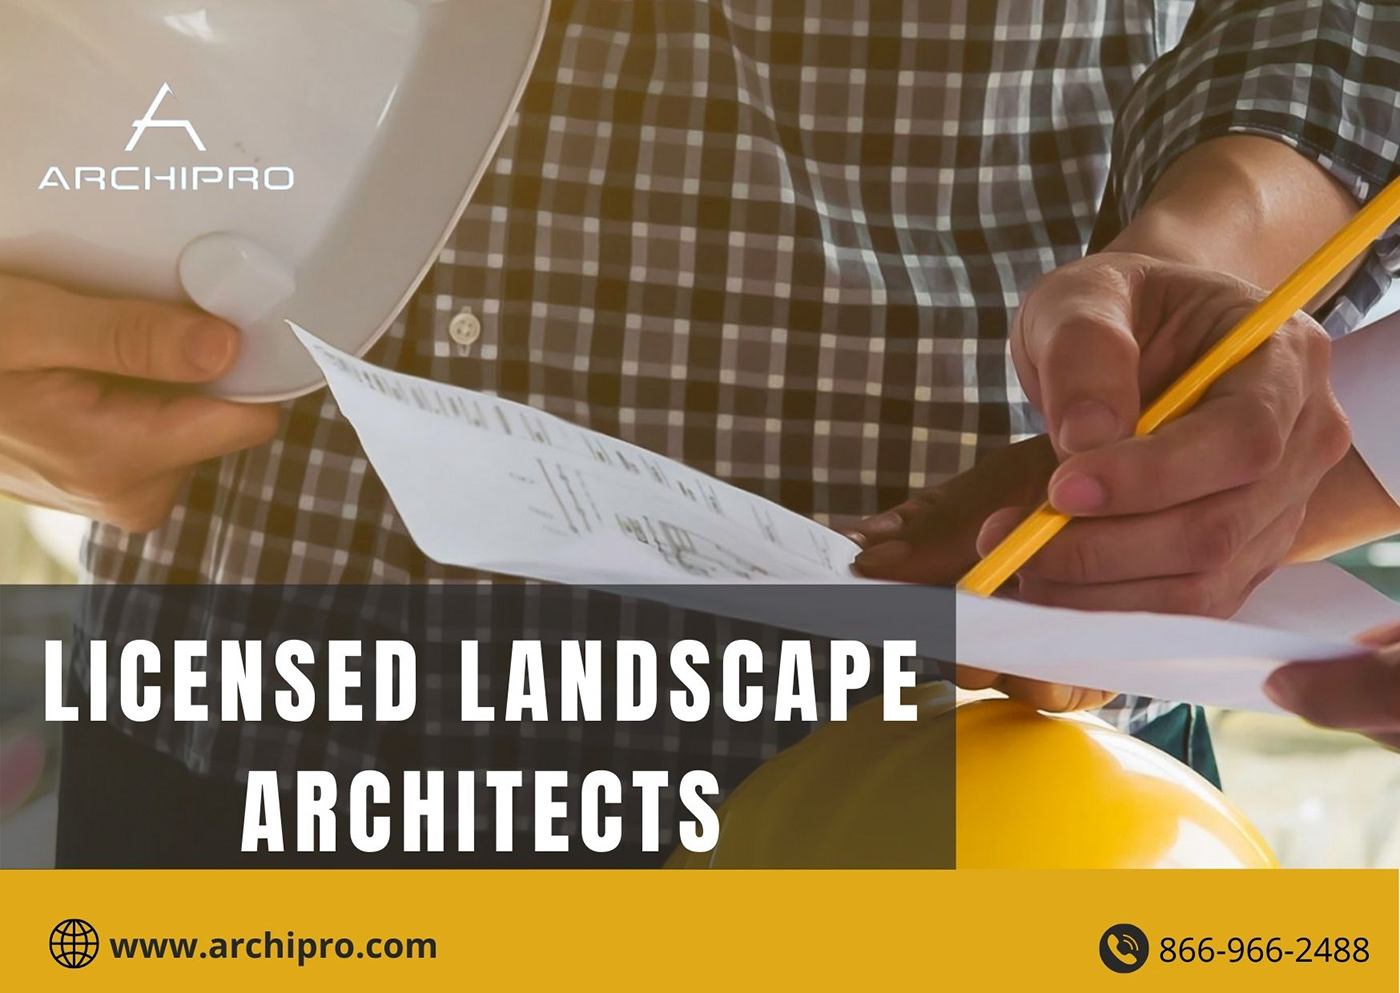 Archipro landscape architects Licensed Landscape